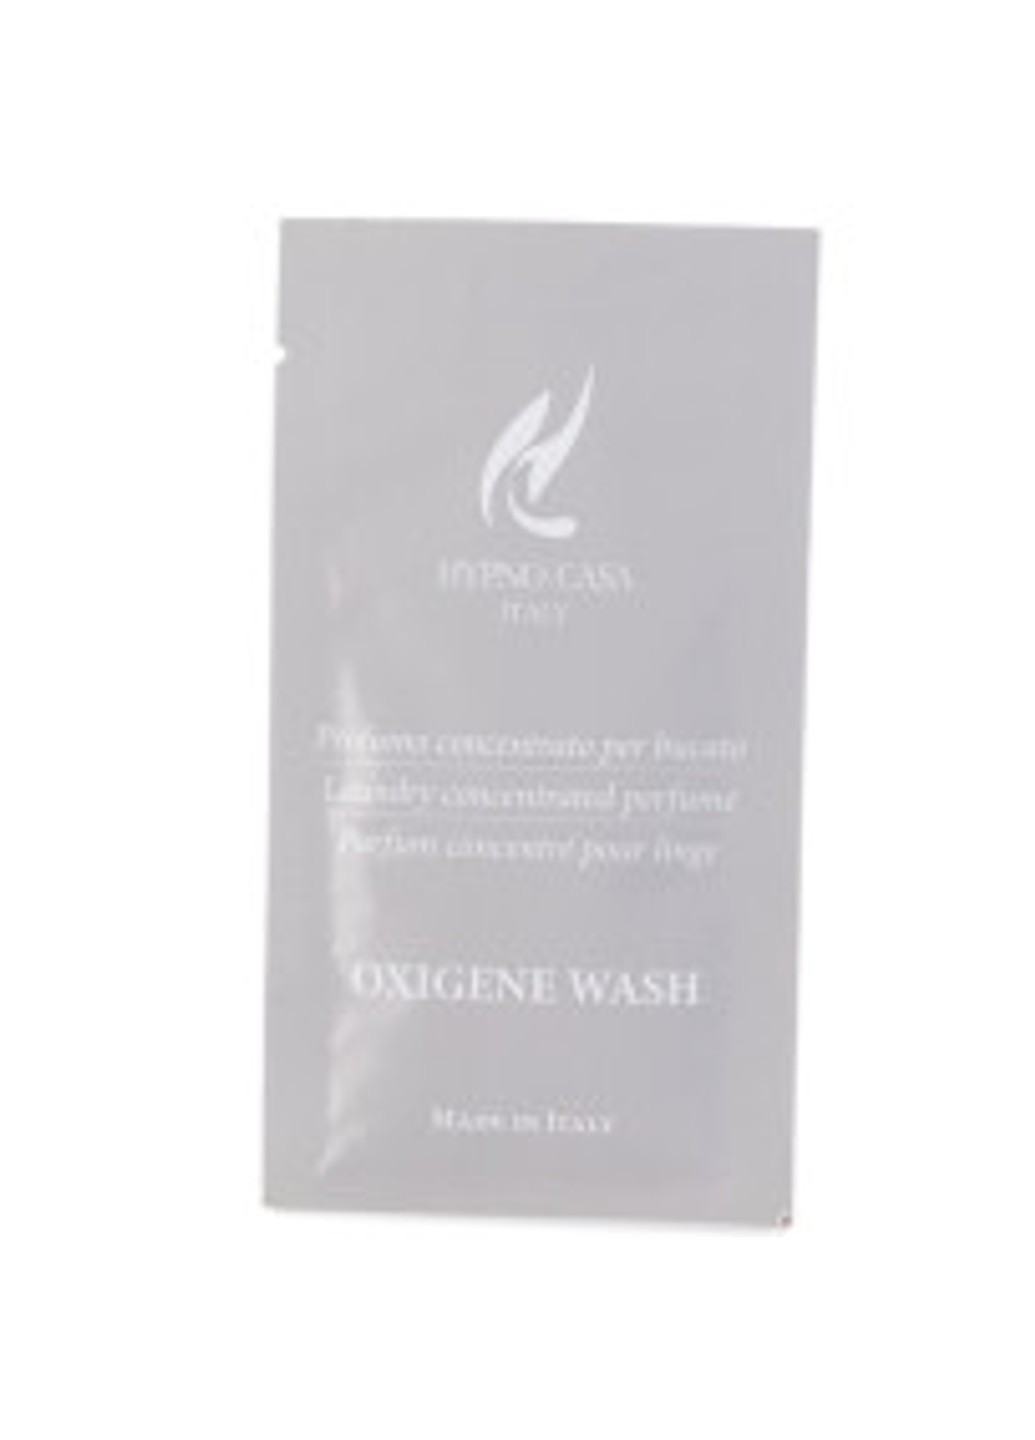 Парфюм для стирки Classic line "Oxigene Wash" 10 мл (монодоза) Hypno Casa (258000933)